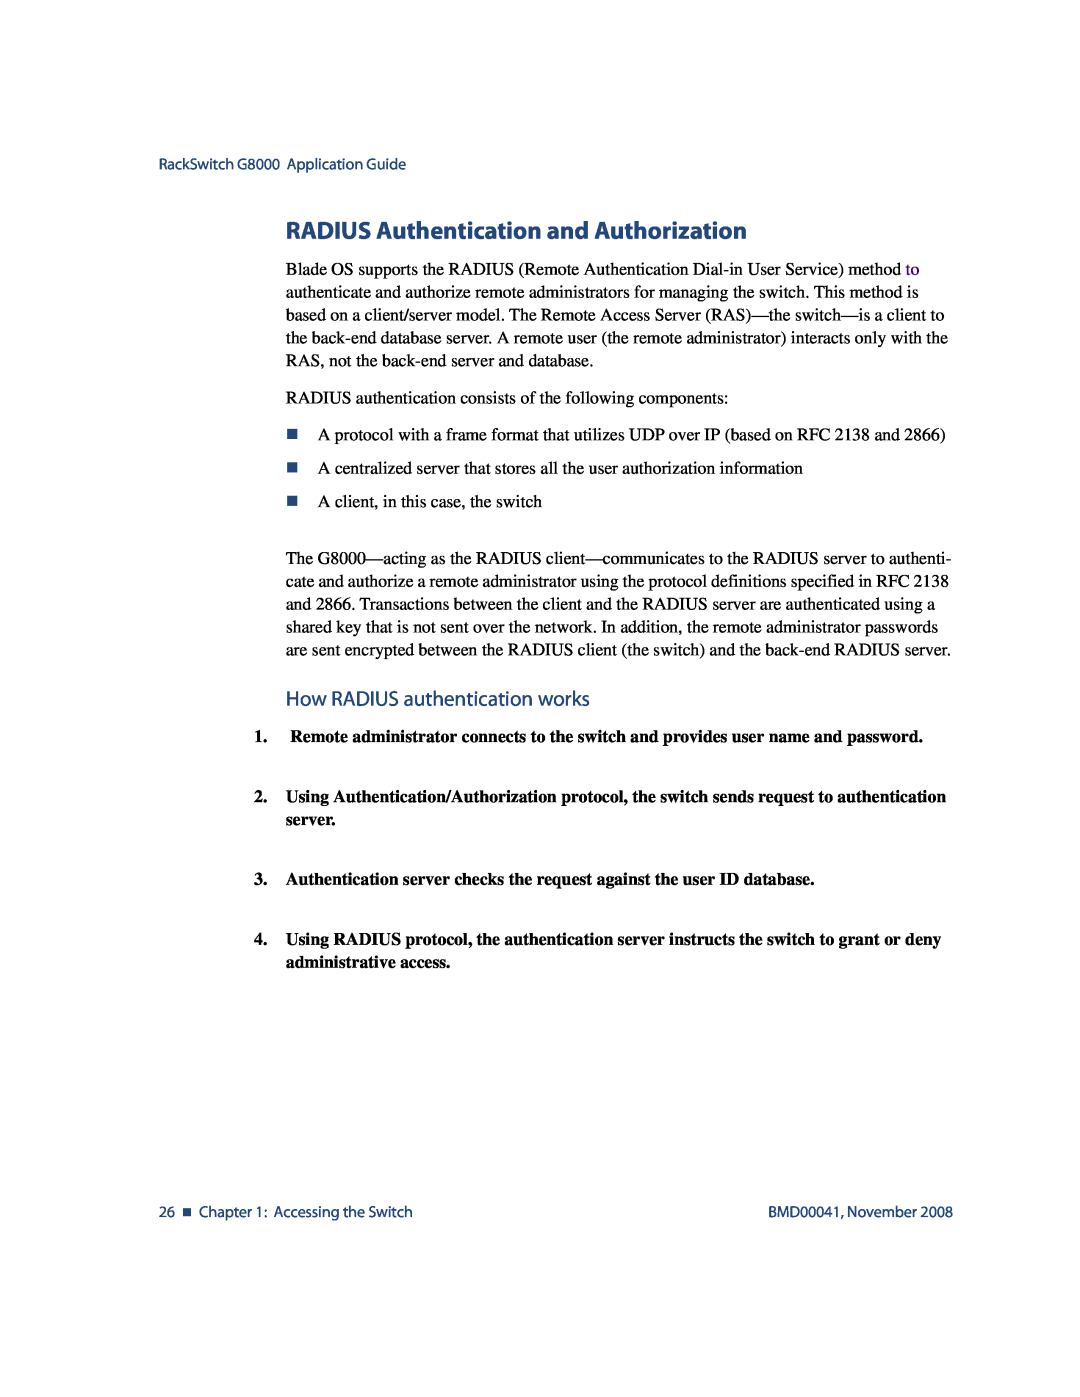 Blade ICE G8000 manual RADIUS Authentication and Authorization, How RADIUS authentication works 